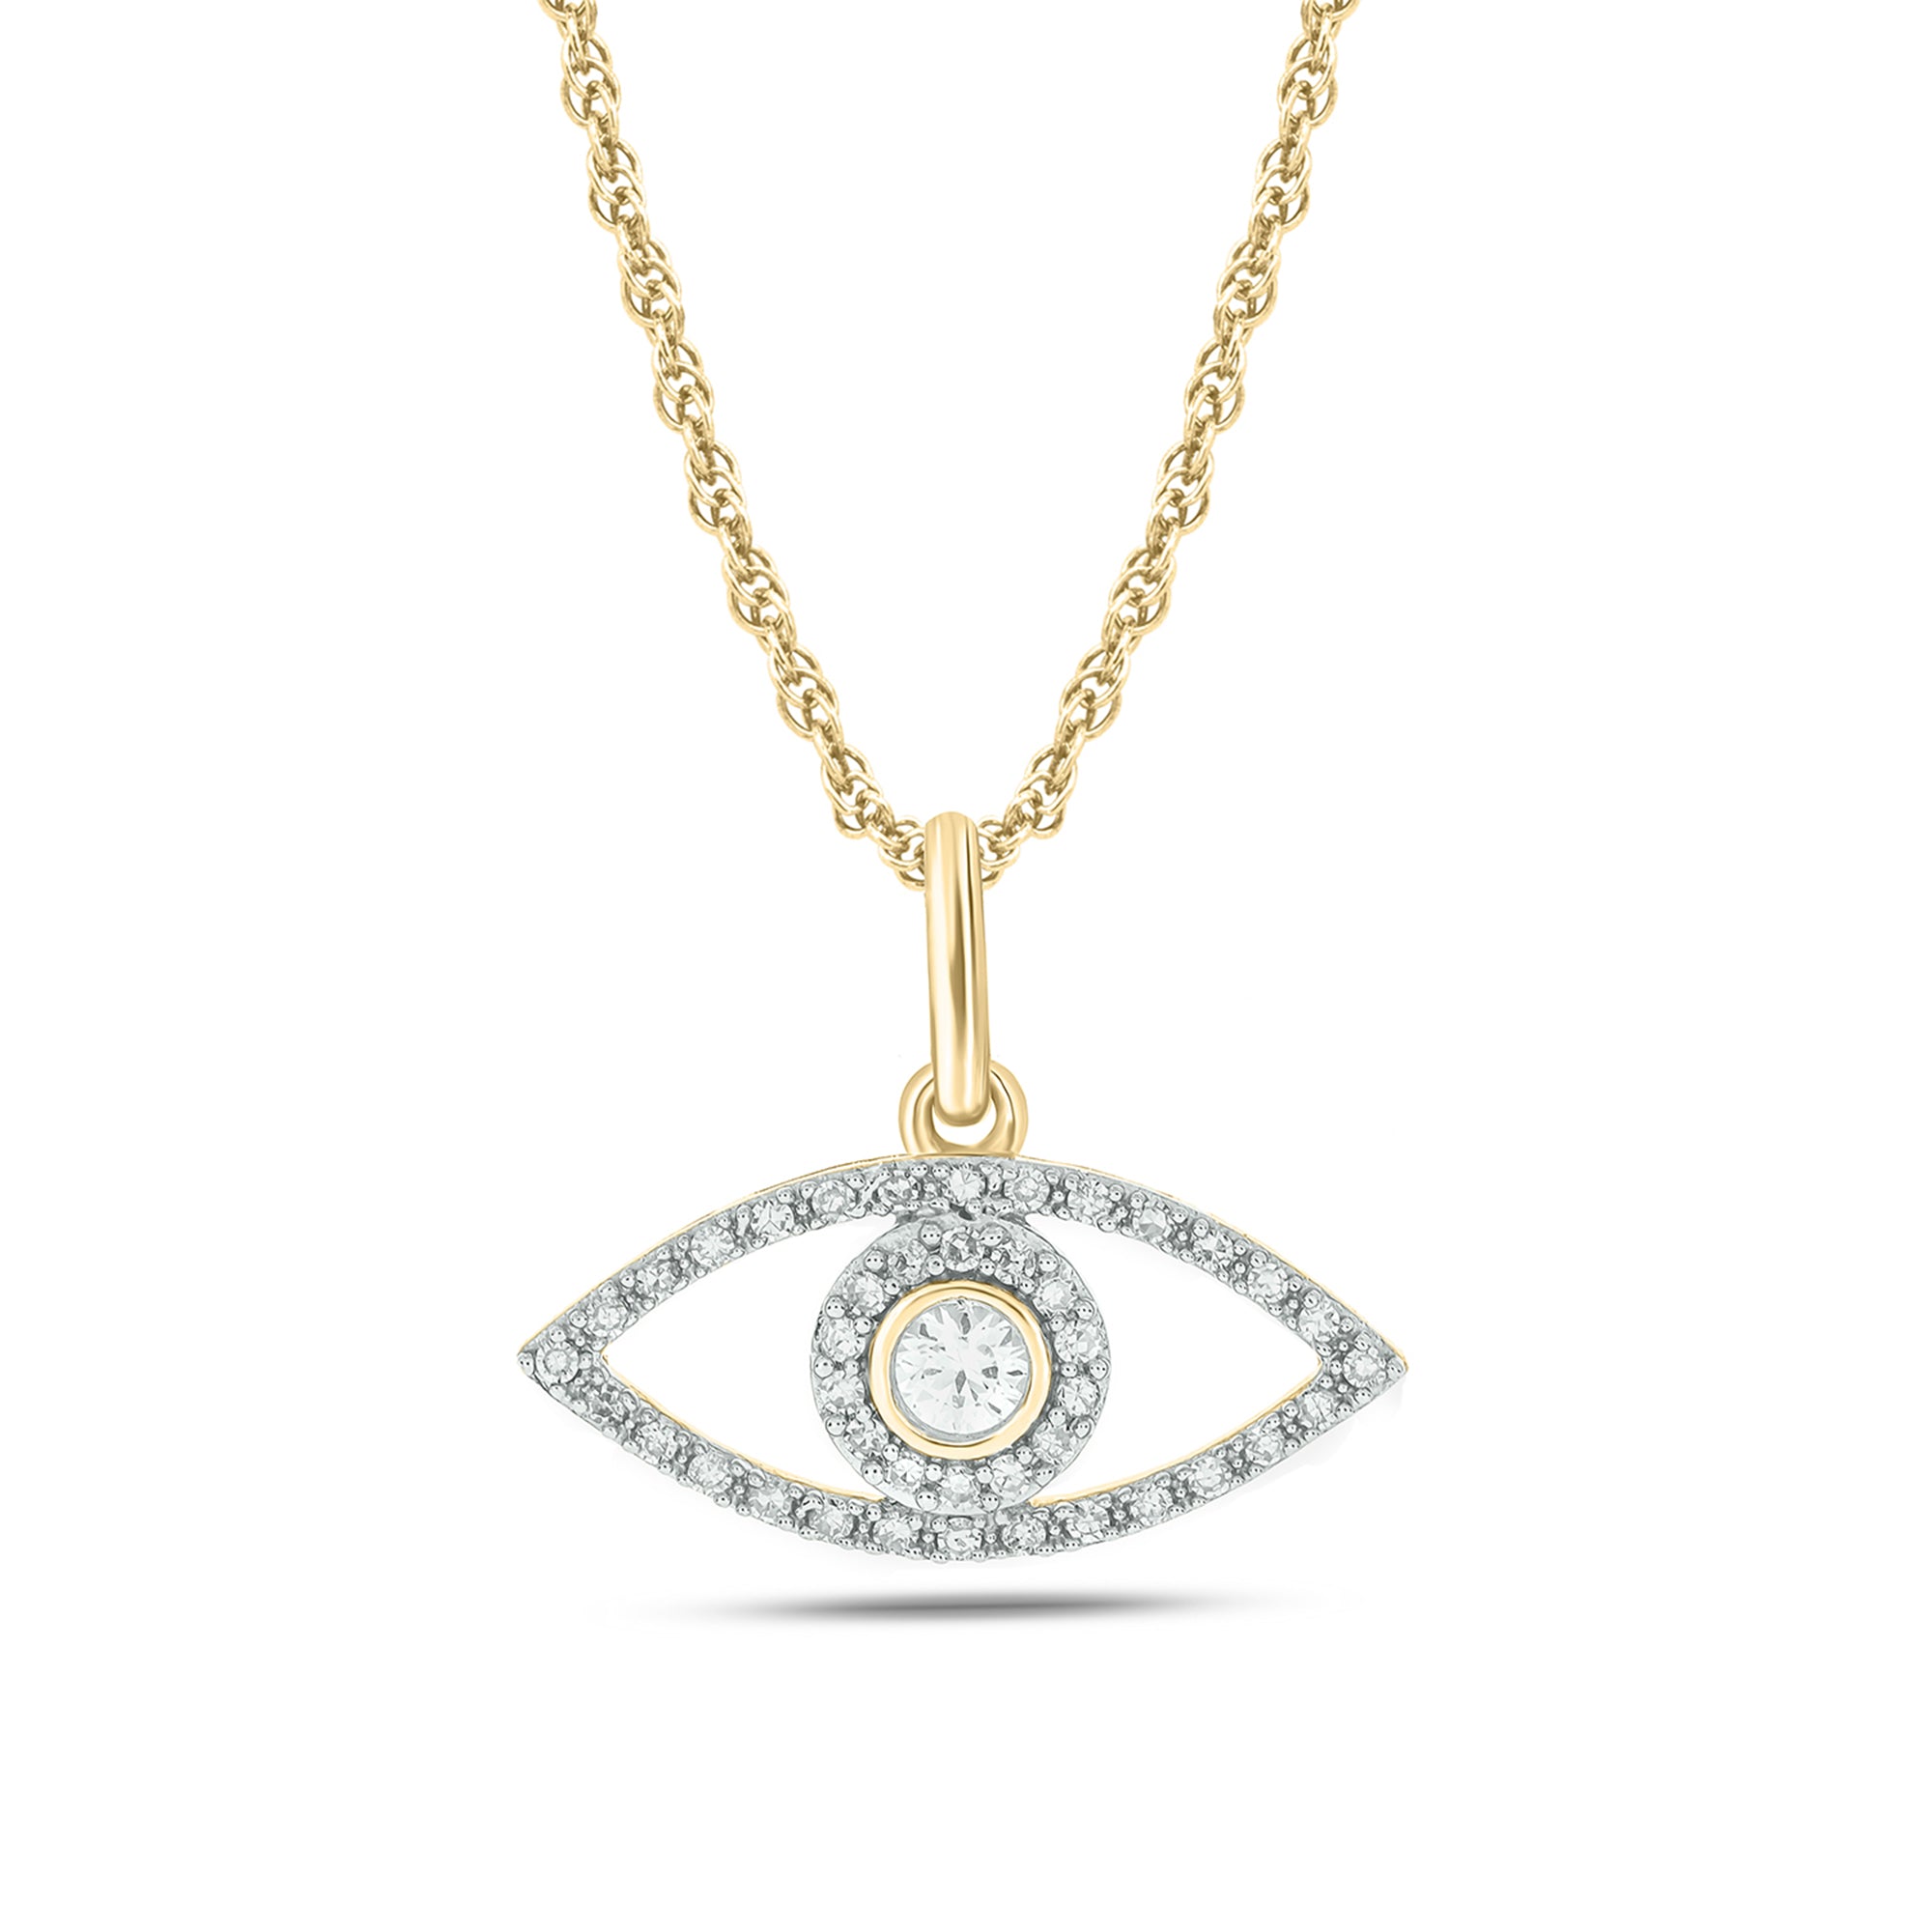 18kt yellow gold diamond Eye pendant necklace